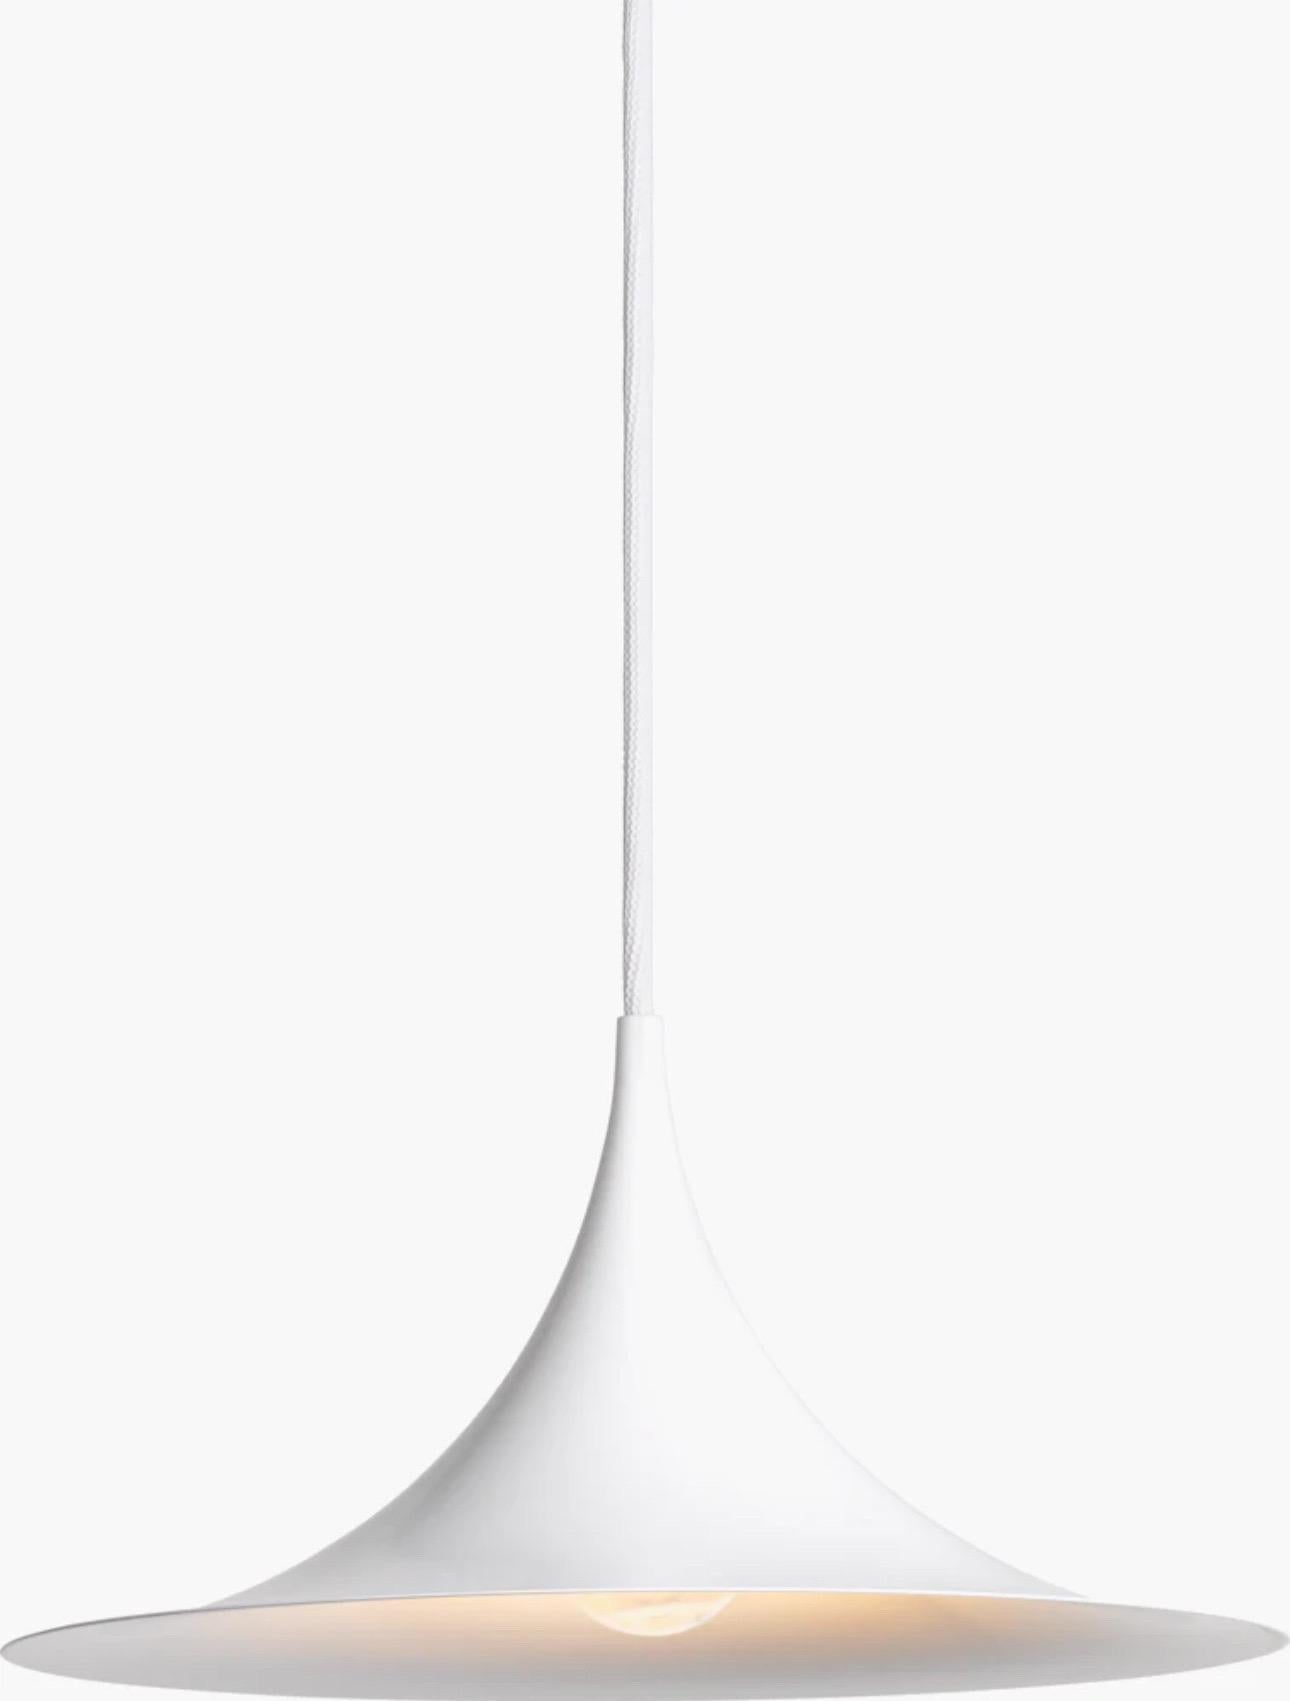 Danish Minimalist White Pendant Light Fixture by Fog & Mørup For Sale